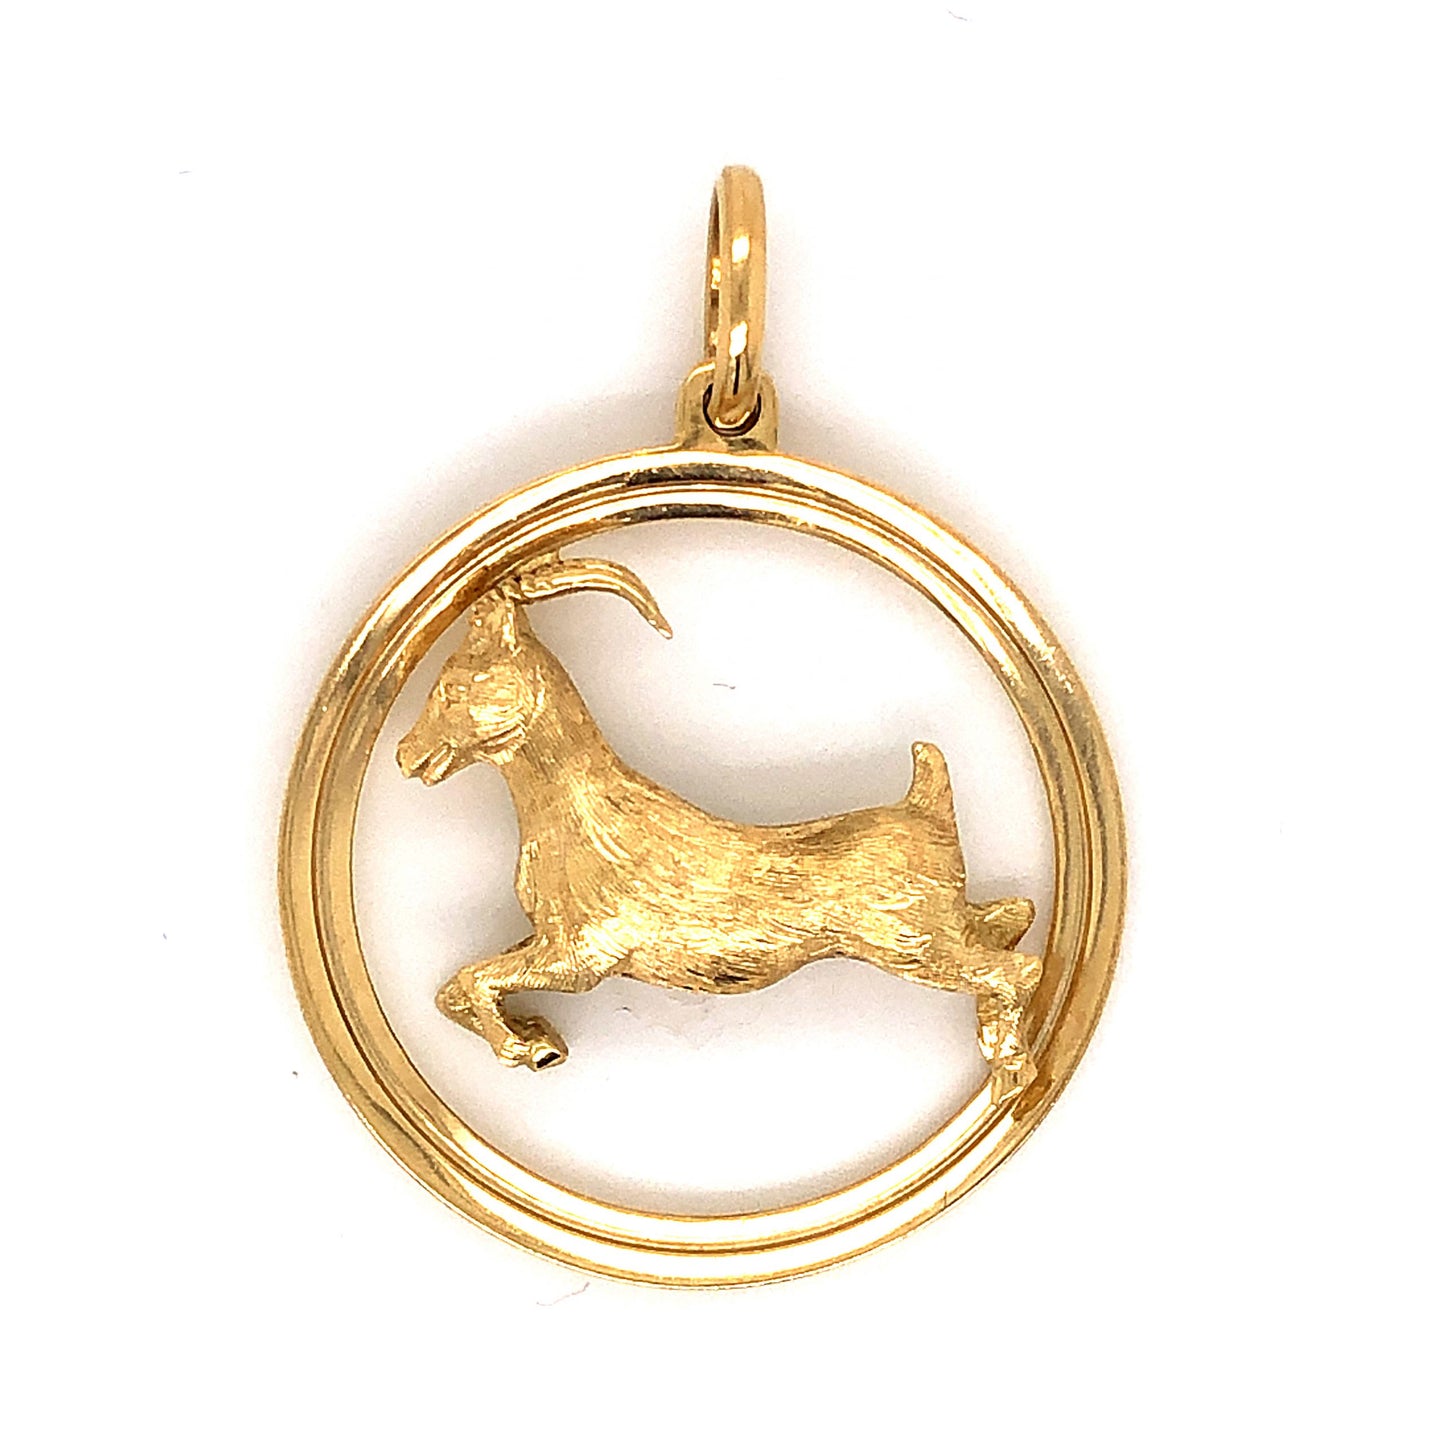 Konstantino 18k Yellow Gold Sterling Silver Zodiac Capricorn Pendant, $980, Saks Fifth Avenue